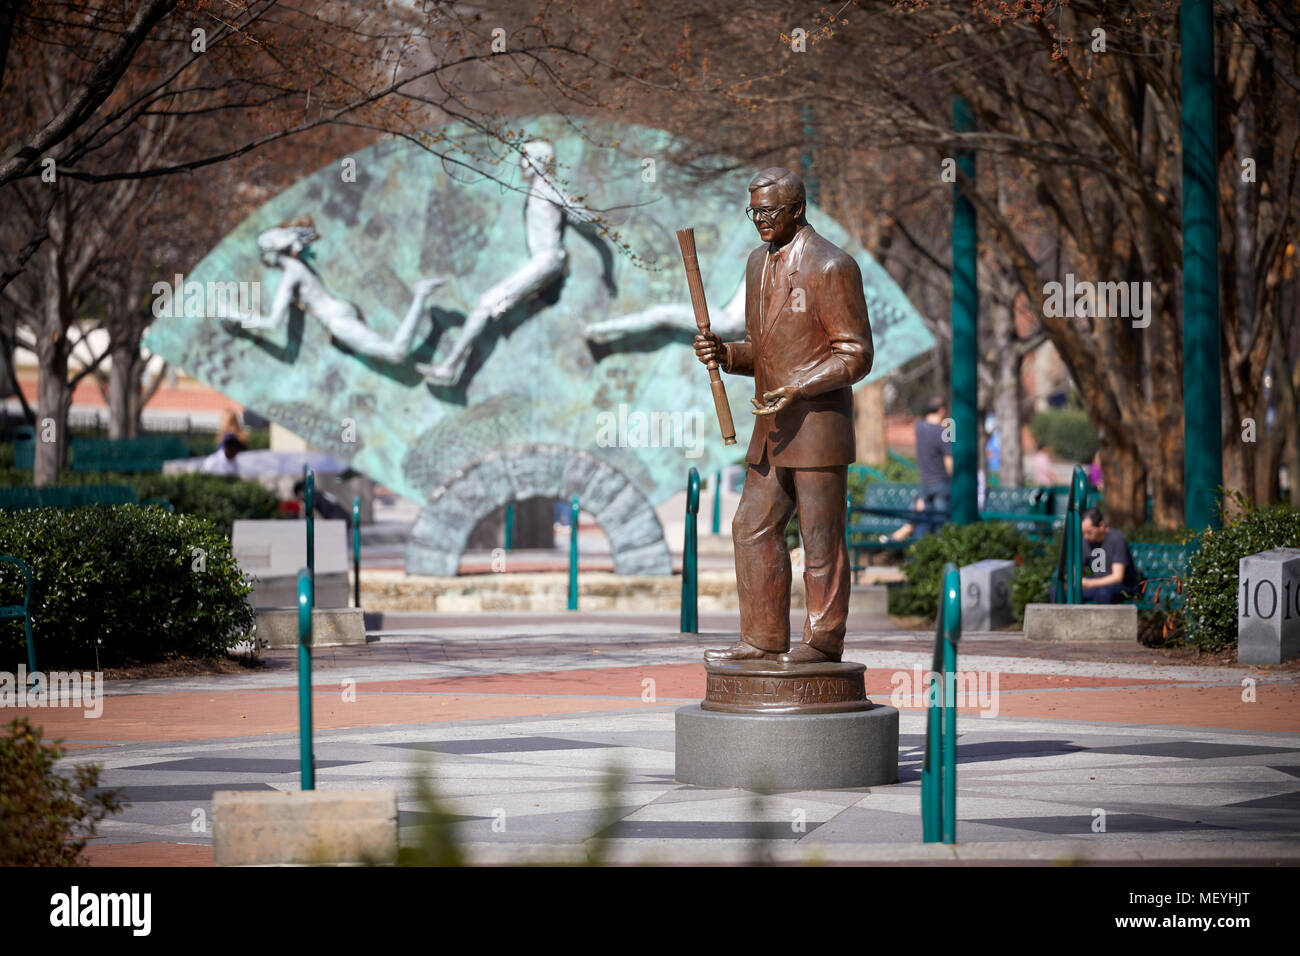 Atlanta capital of the U.S. state of Georgia,  Olympic Centennial Park bronze statue of Billy Payne designed by sculptor Nobuhito Matoba Stock Photo